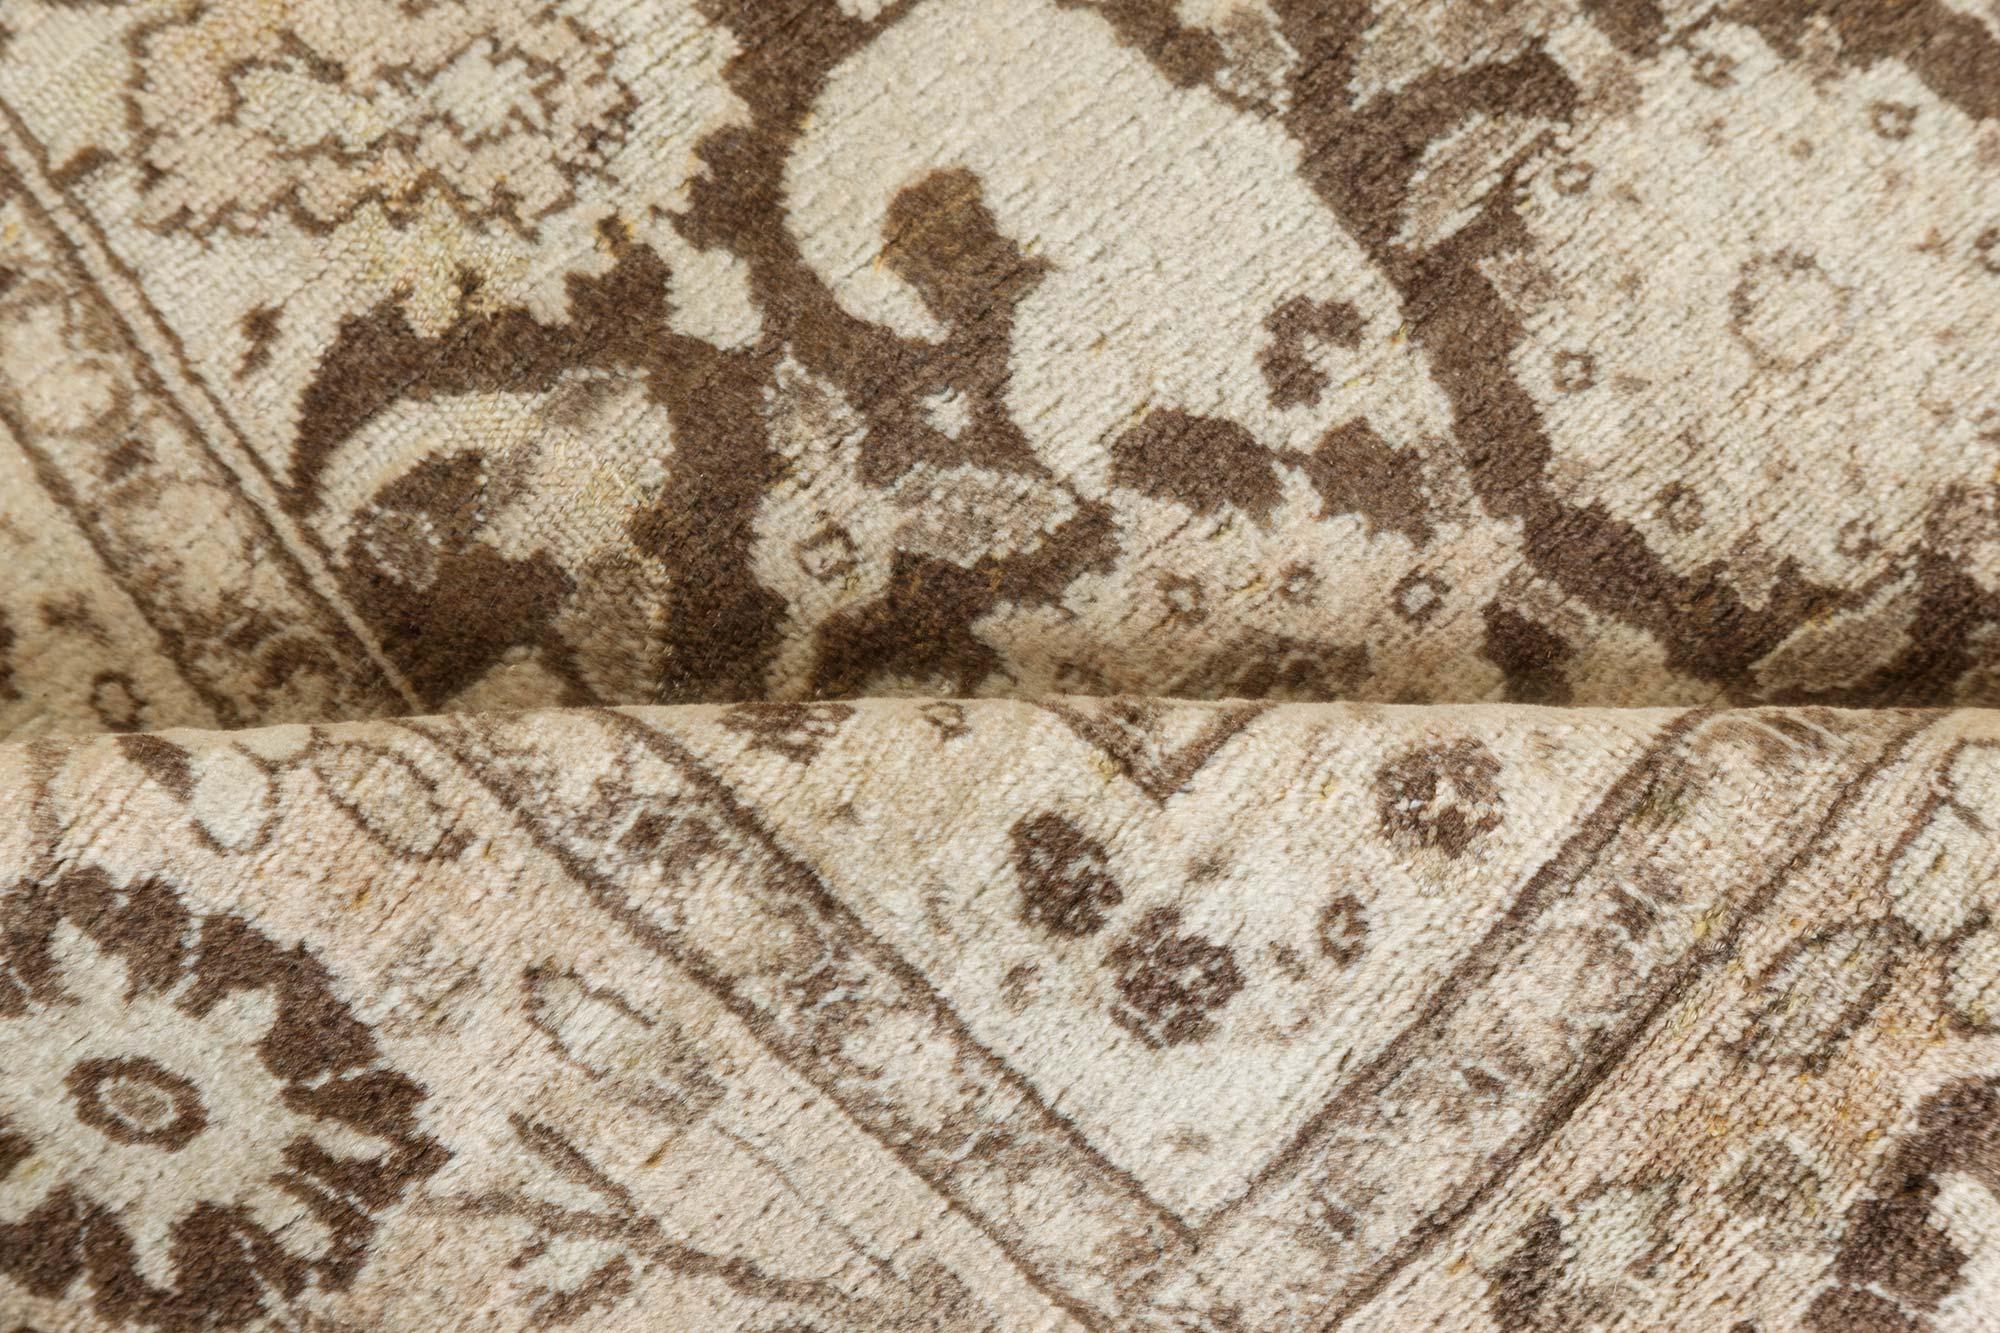 Antique Persian Tabriz brown handmade wool rug
Size: 8'6